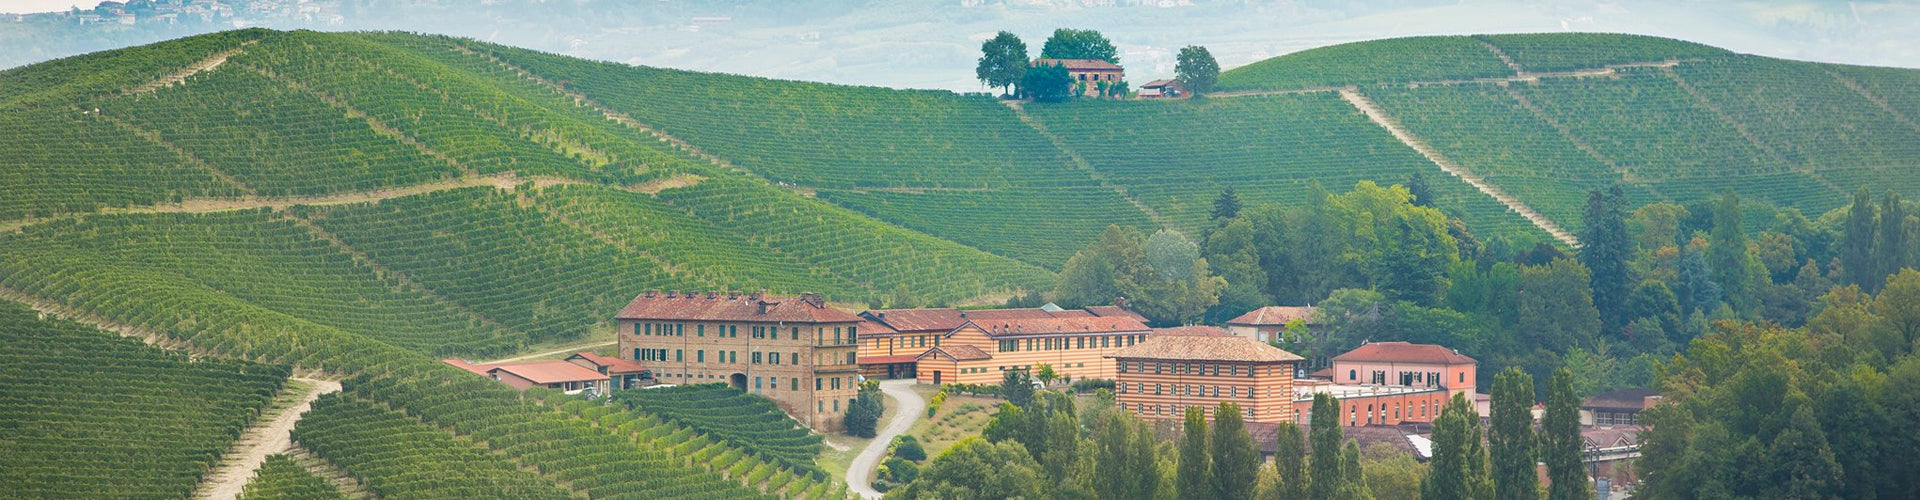 Fontanfredda Winery and Vineyards in the Serralunga d'Alba, Piemonte - Italy